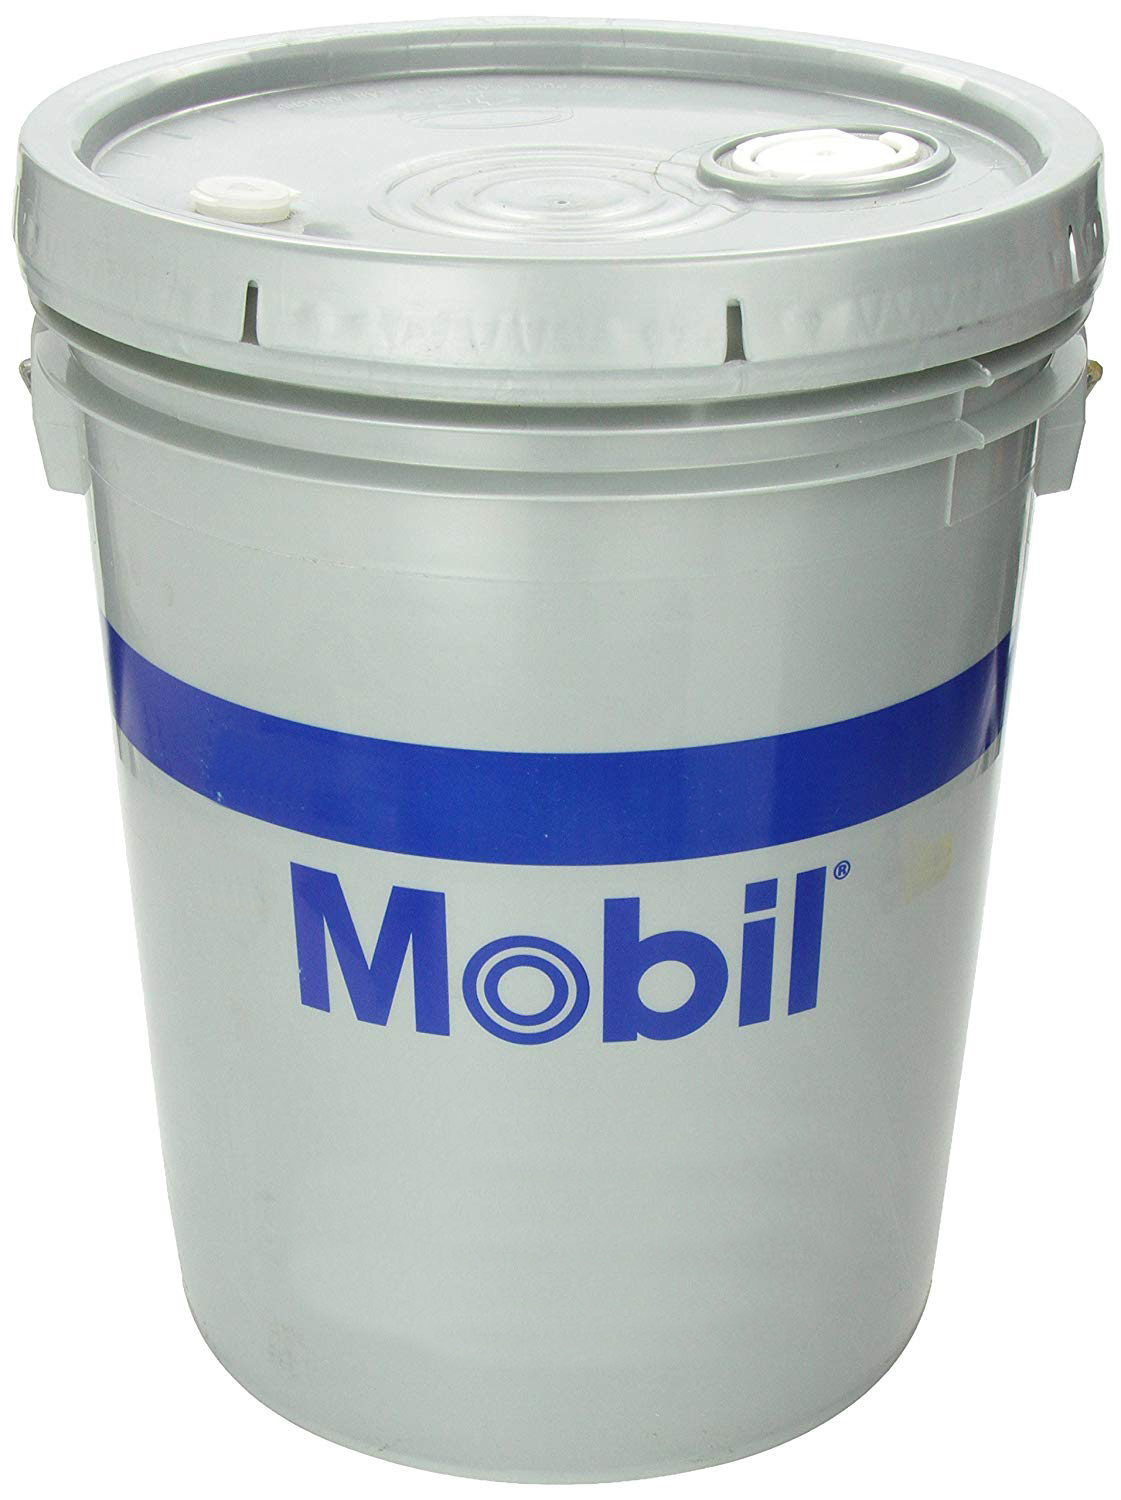 MOBIL SHC 524 (100% SYNTHETIC ISO-32) - 5 Gallon Pail